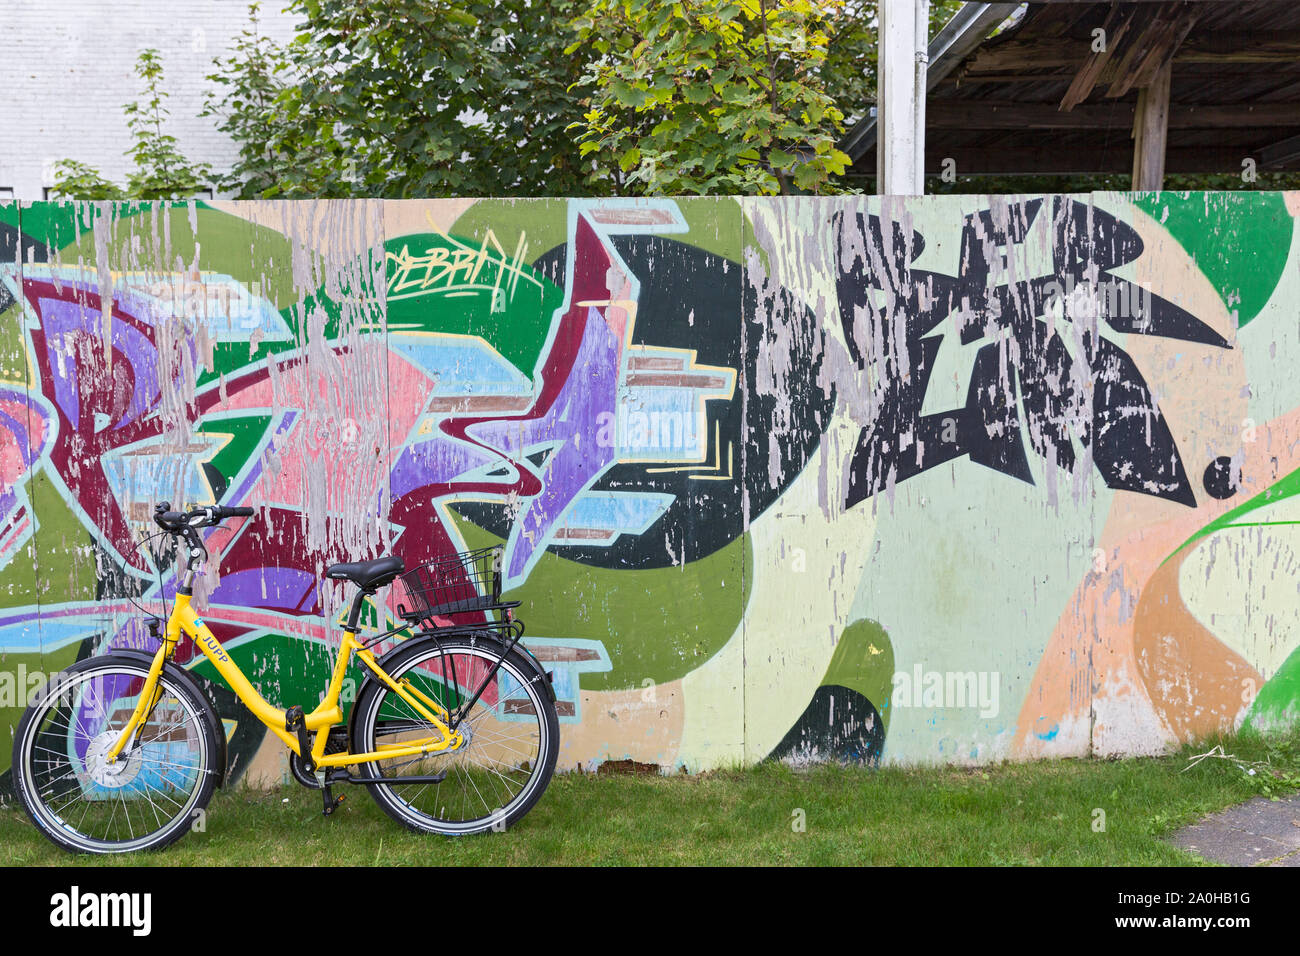 Norderney; Graffiti, Bauzaun, Fahrrad, ruine, Weststrandstrasse Foto Stock